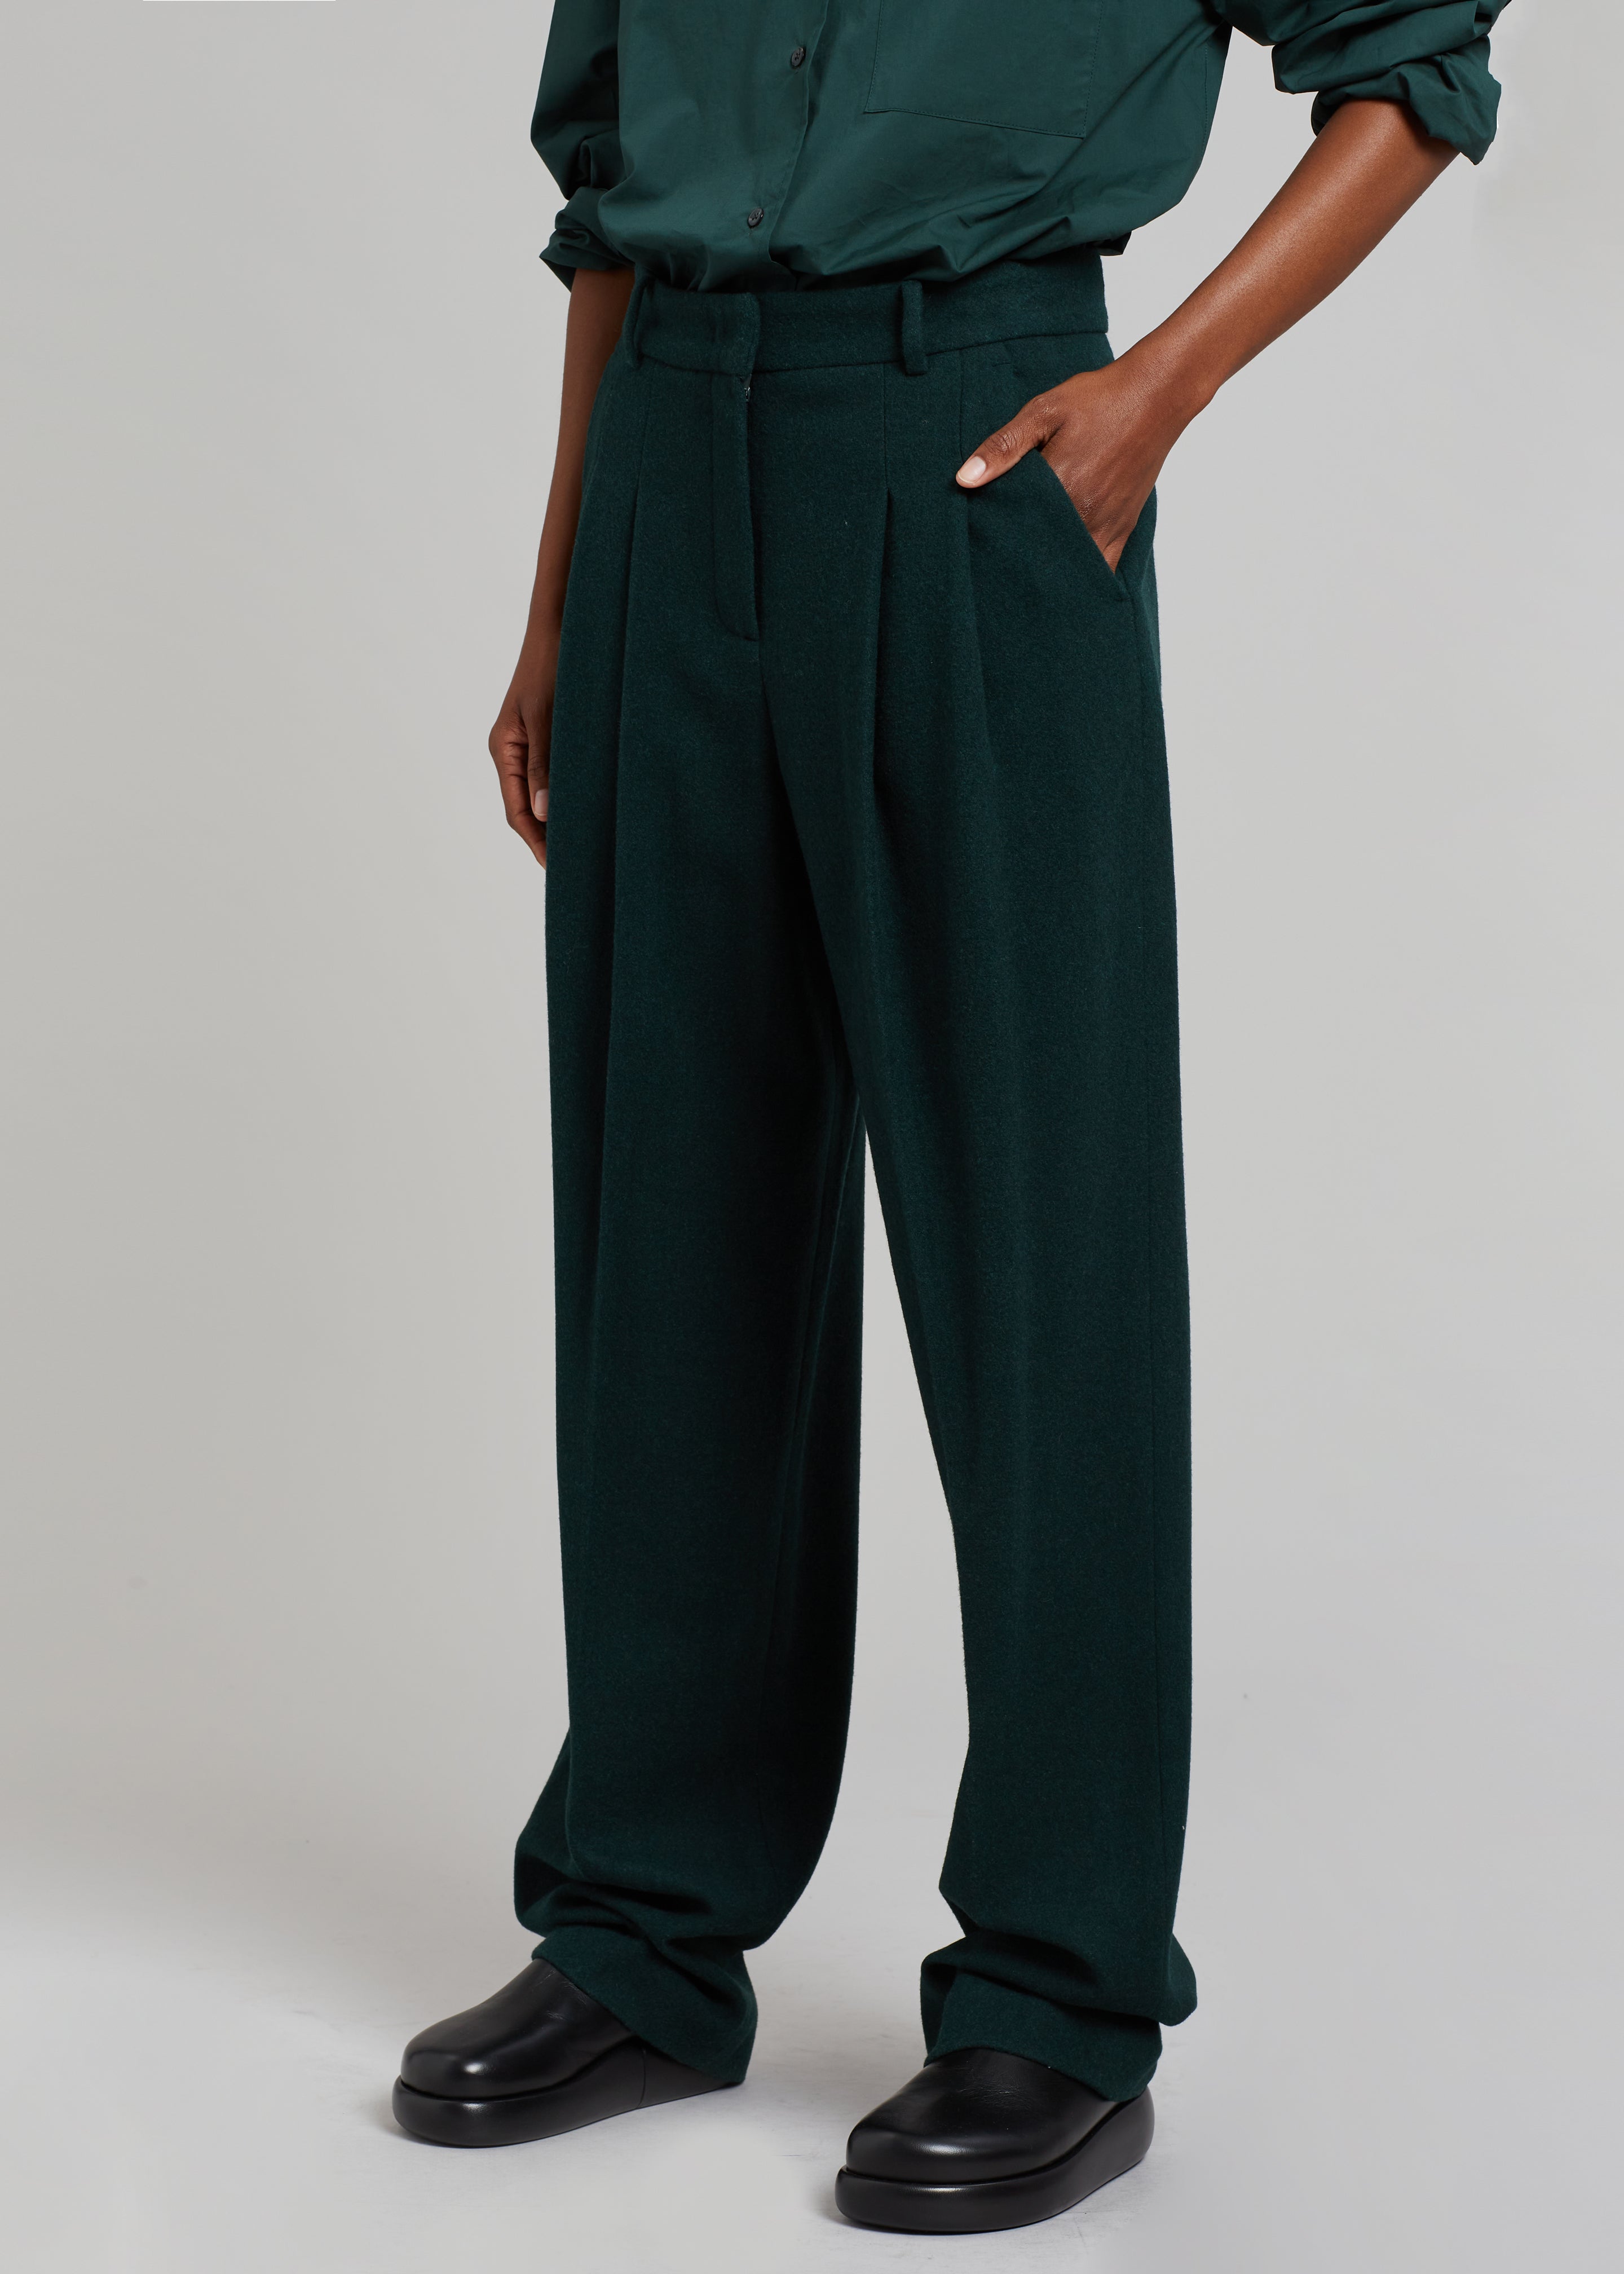 Johnson Woolen Mills Men's Wool Spruce Green Pant